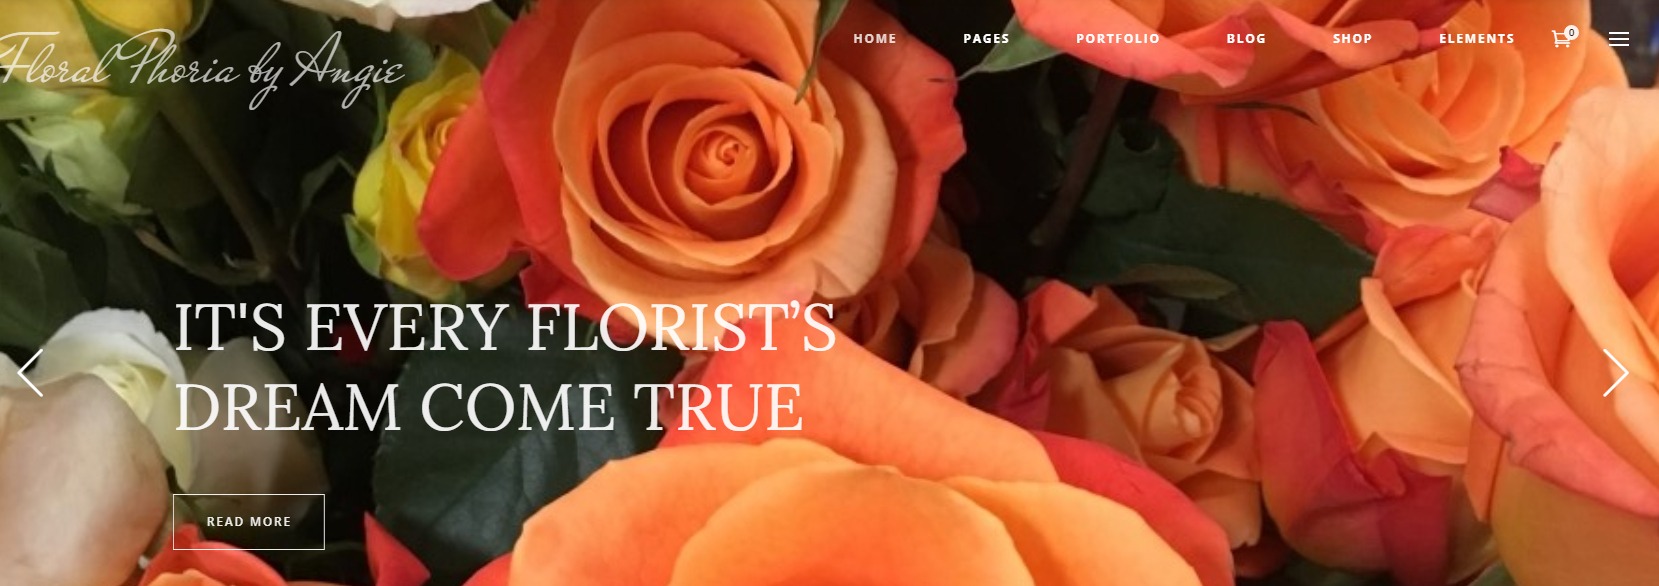 Floral Phoria Website Slider